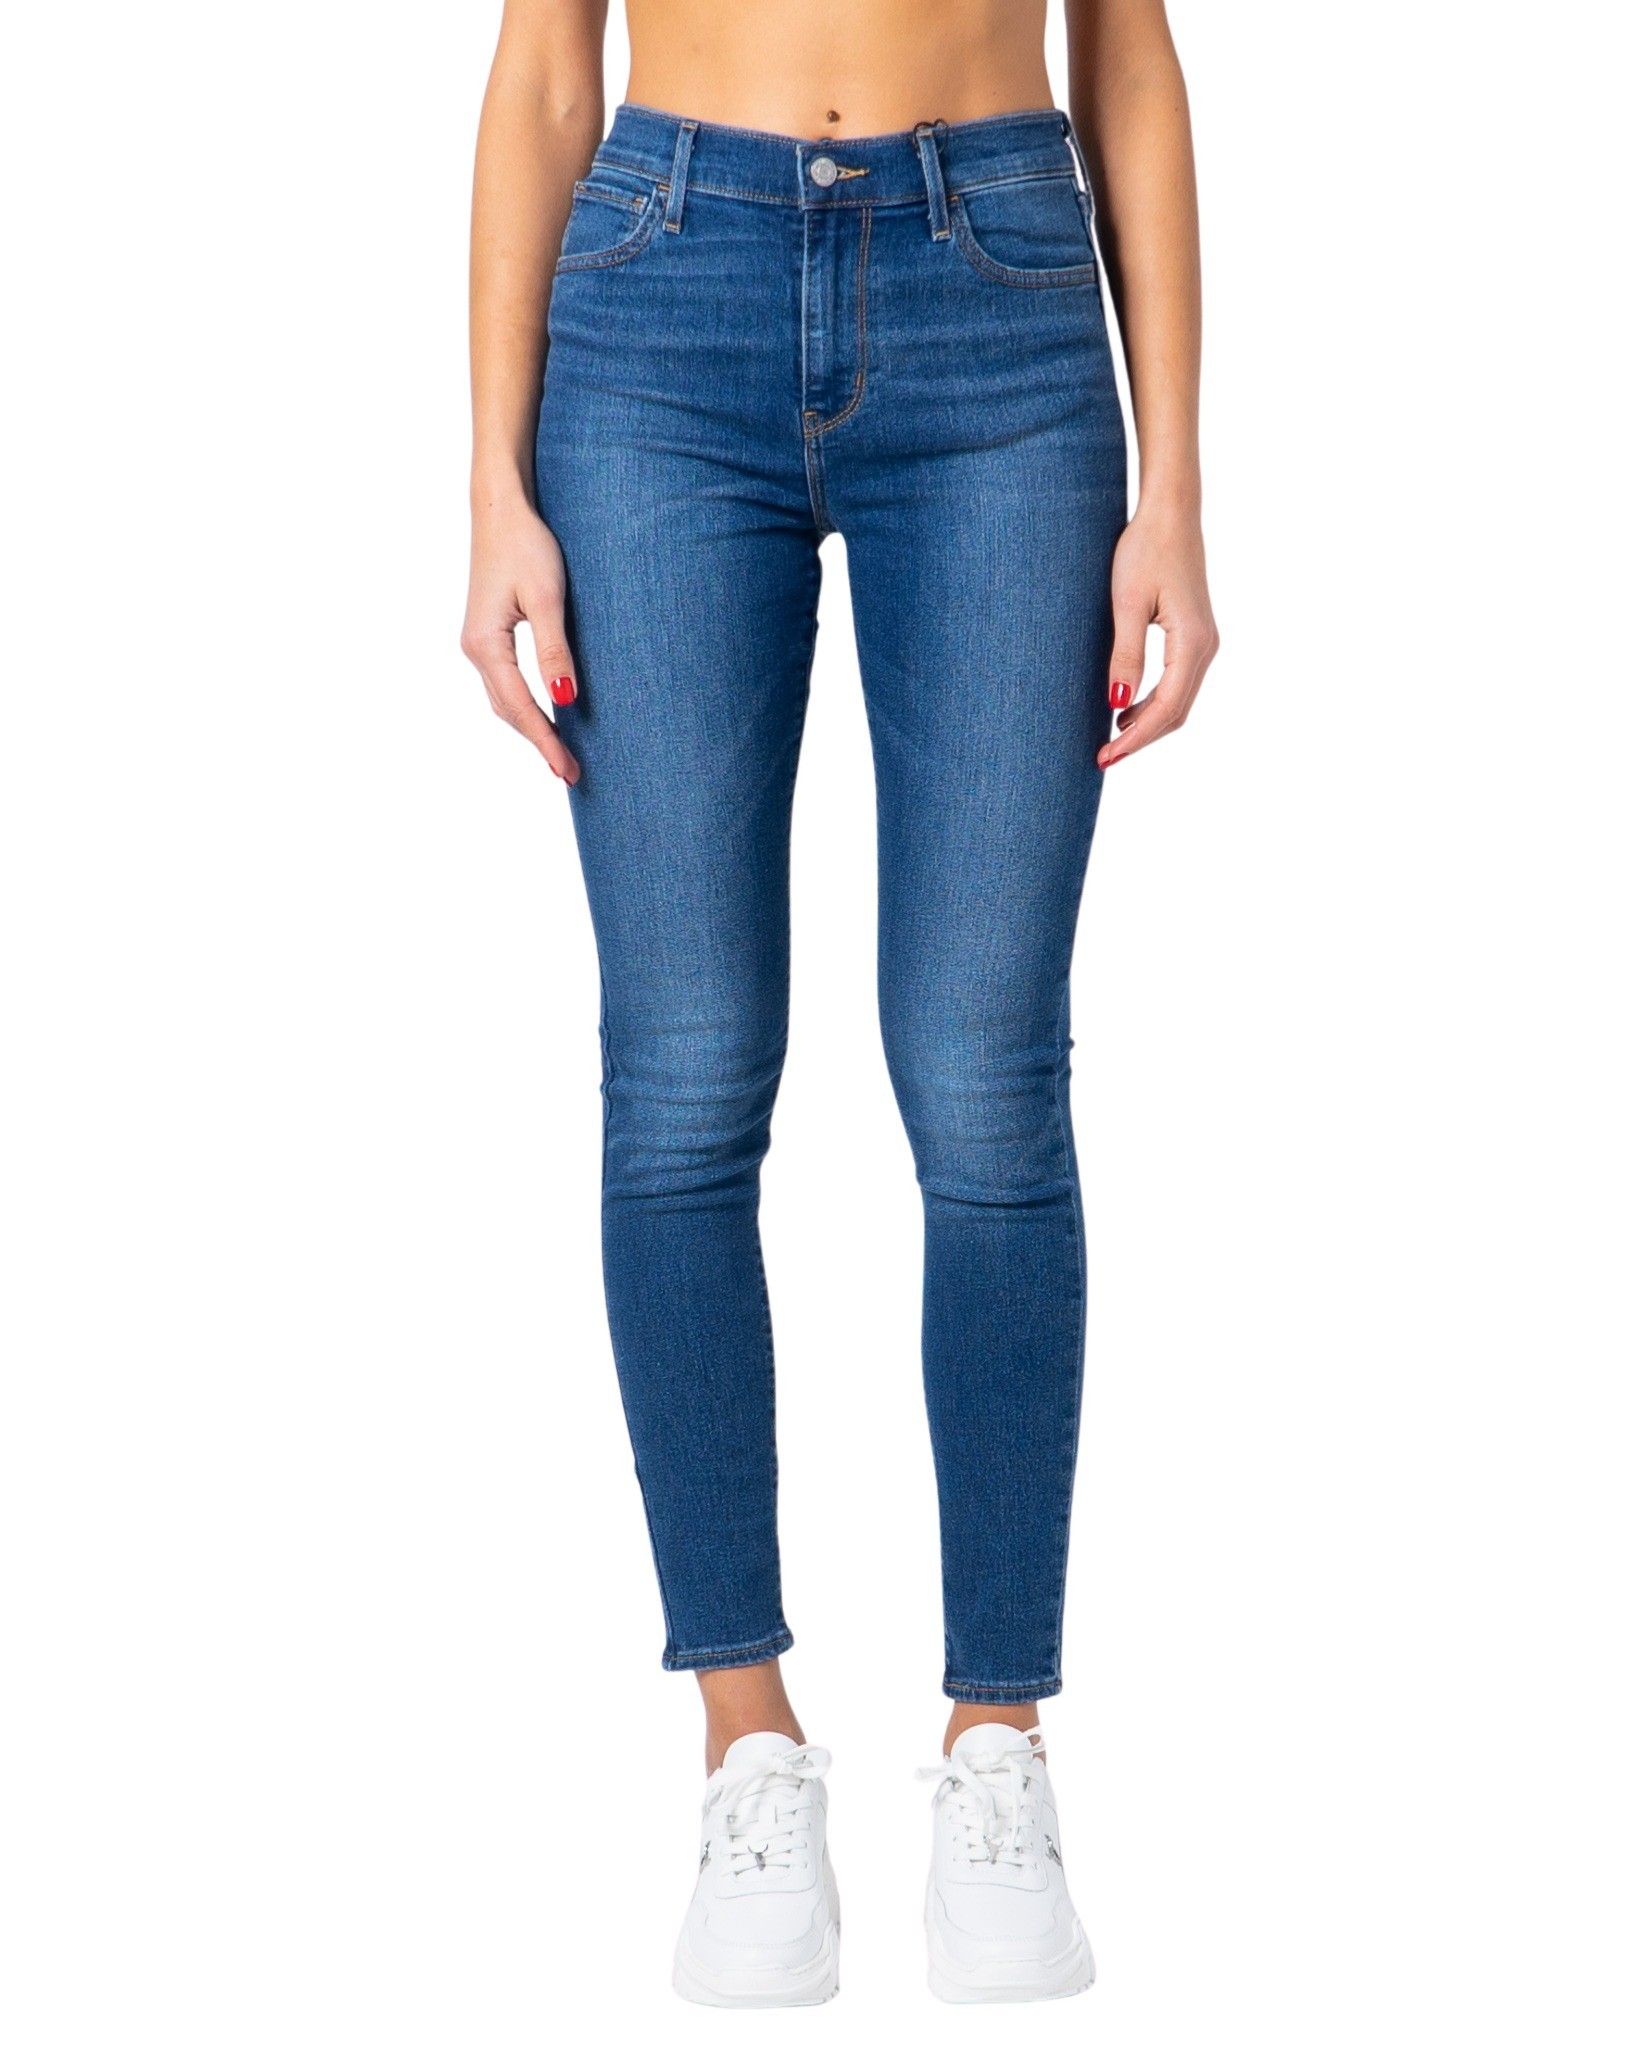 Women's Levis 720 High Rise Super Skinny Jeans in Denim